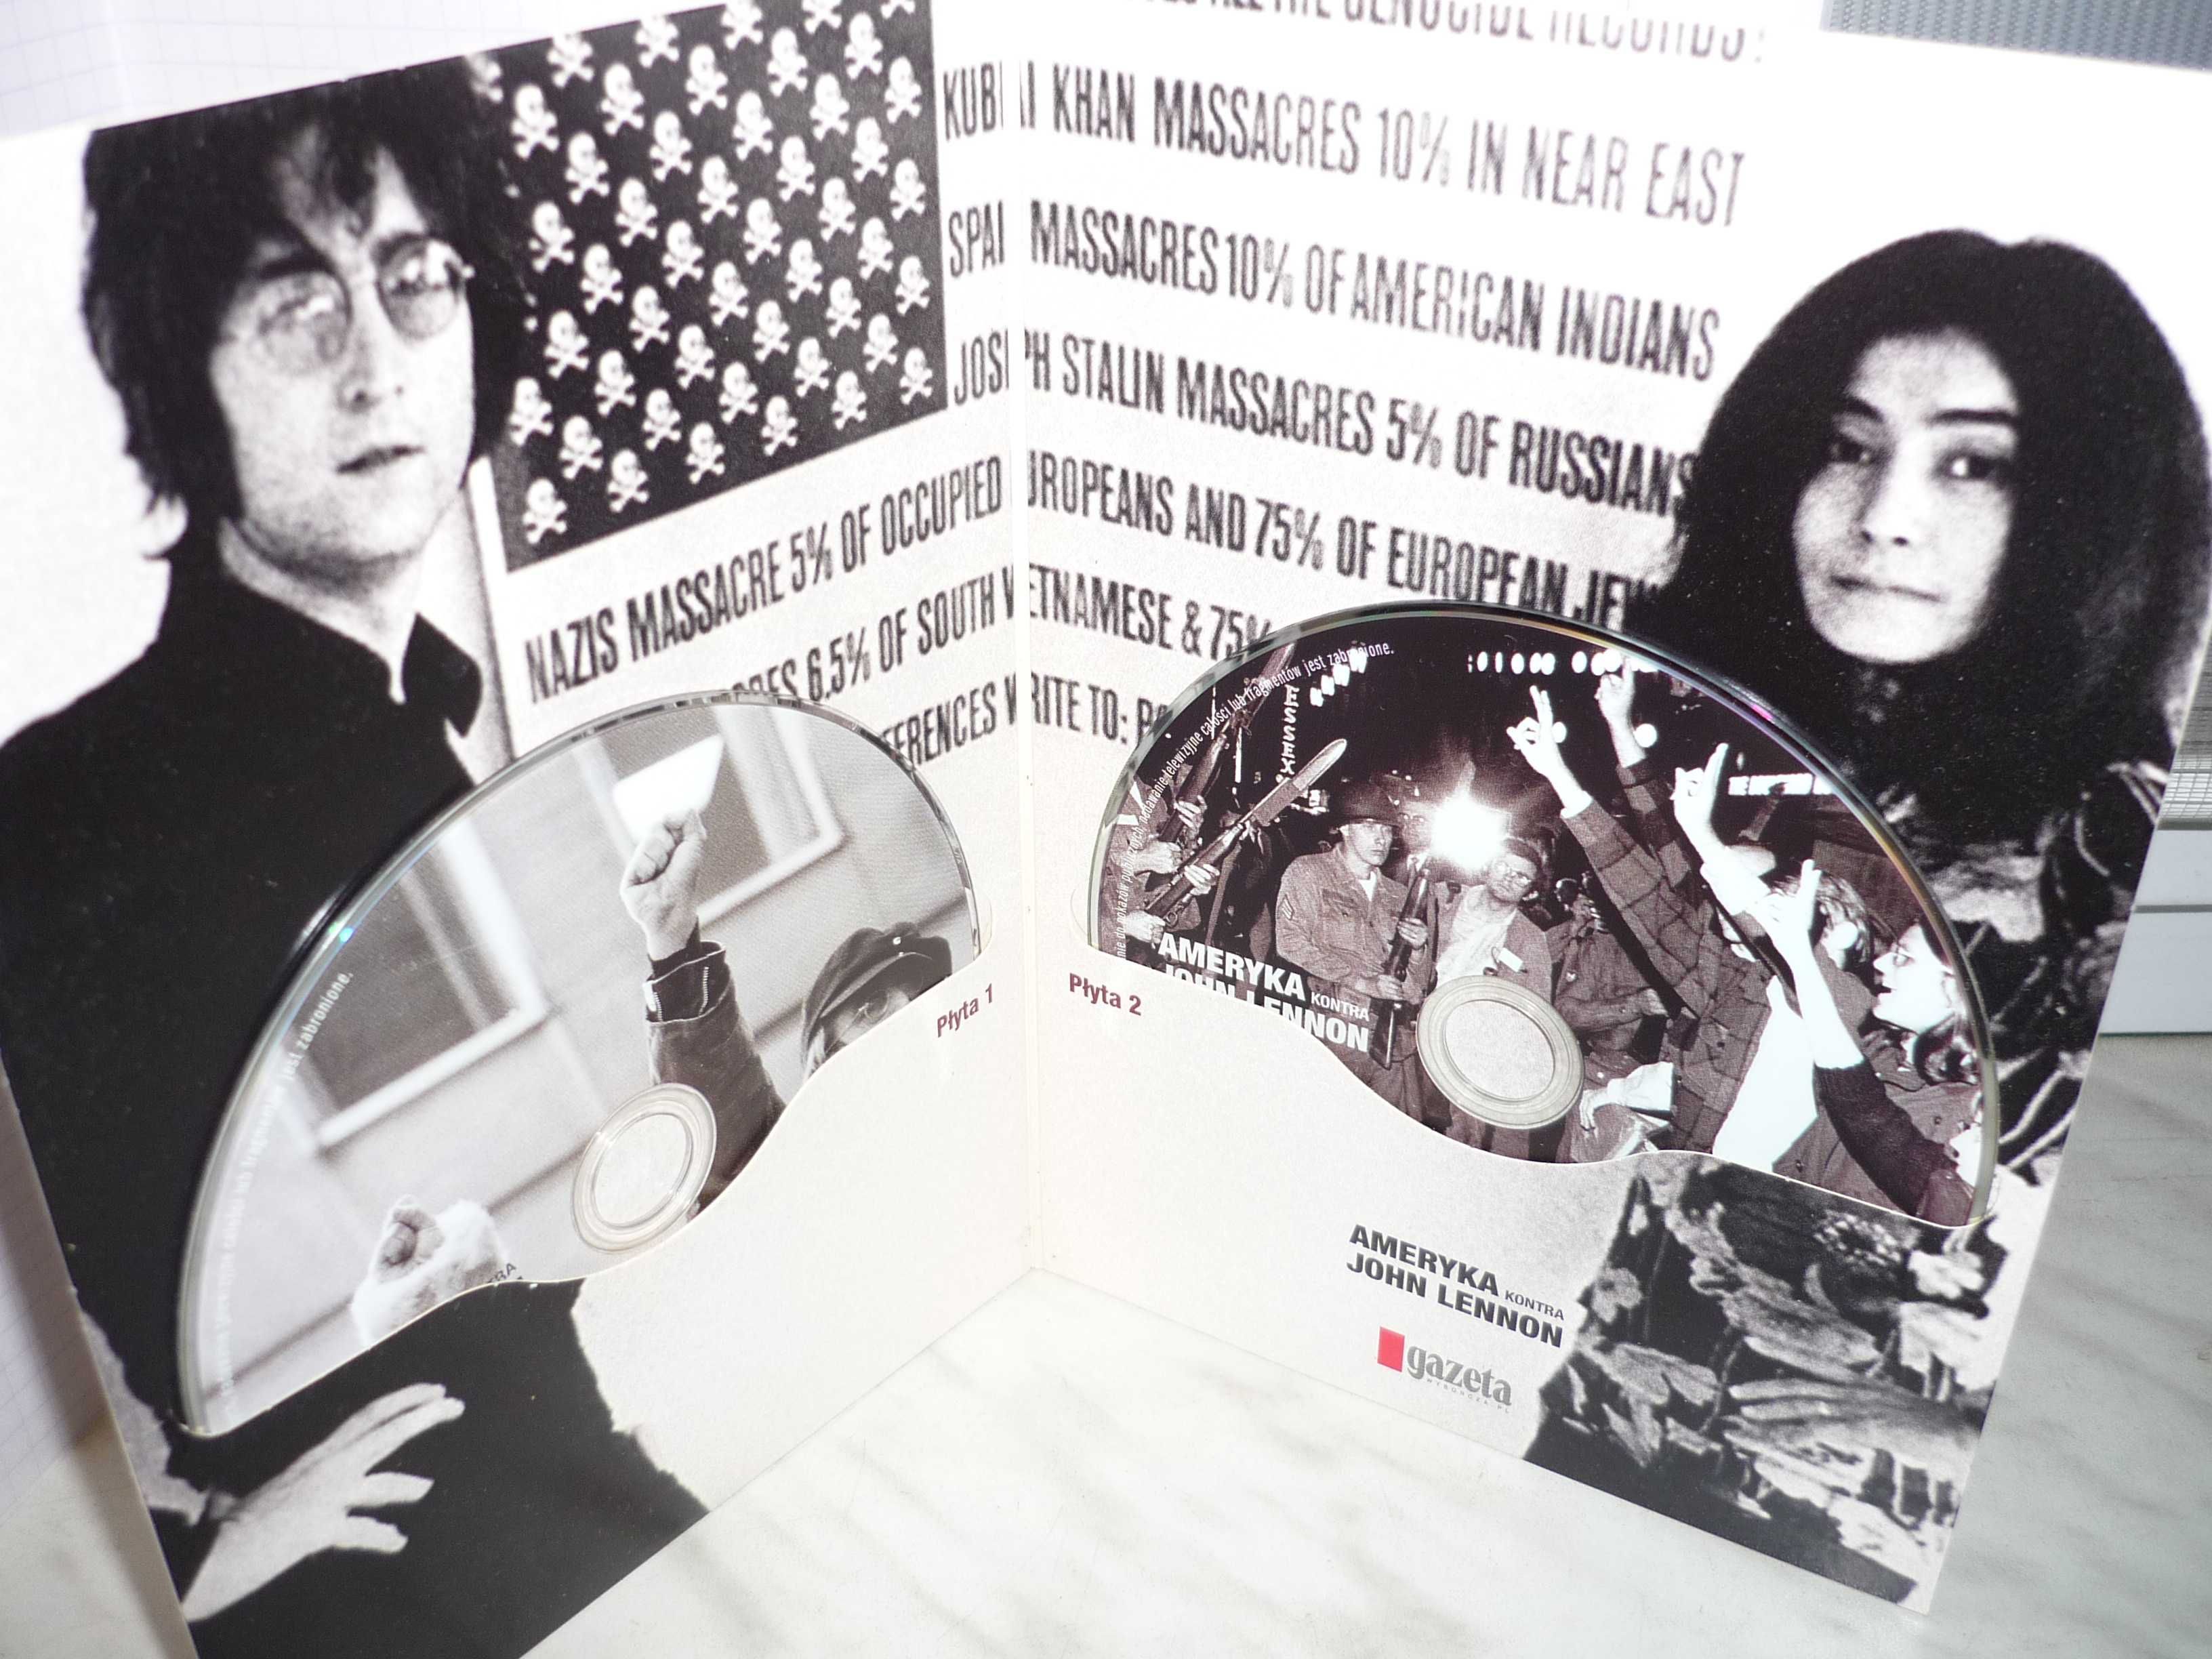 Ameryka kontra John Lennon , DVD.